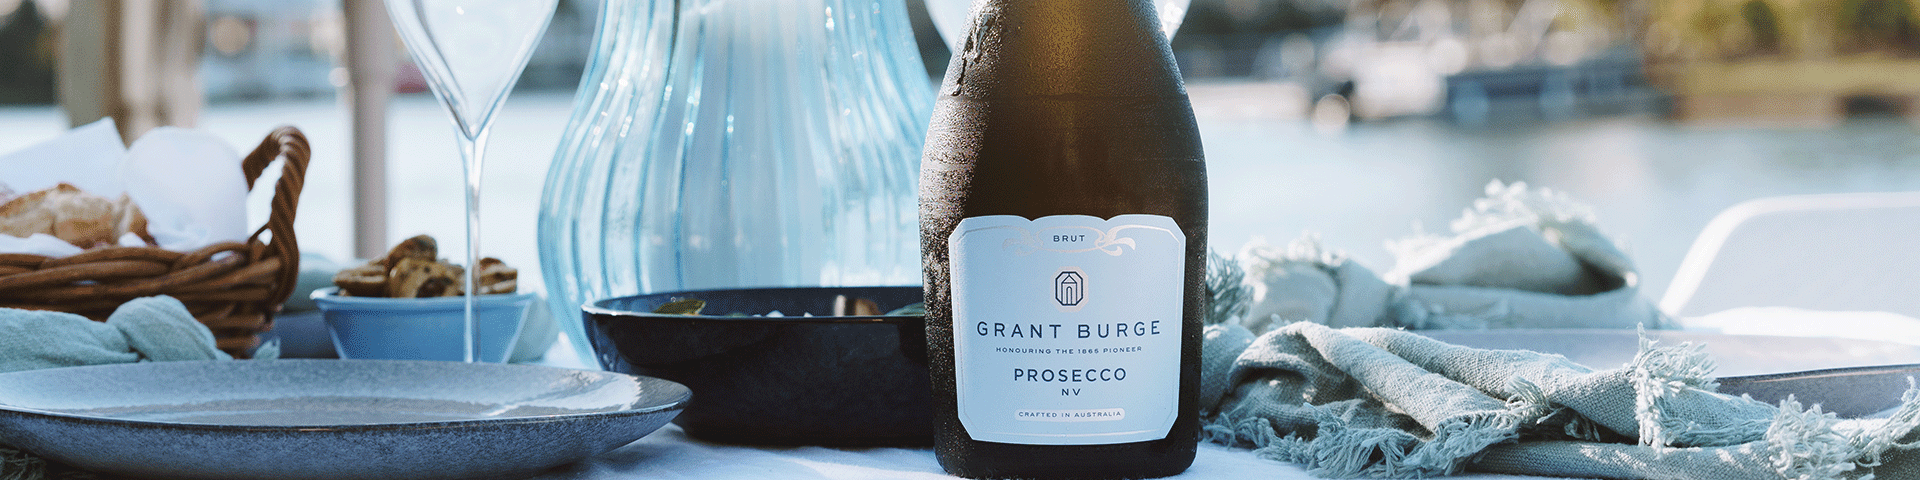 Award-winning Barossa winery Grant Burge introduces new Prosecco range